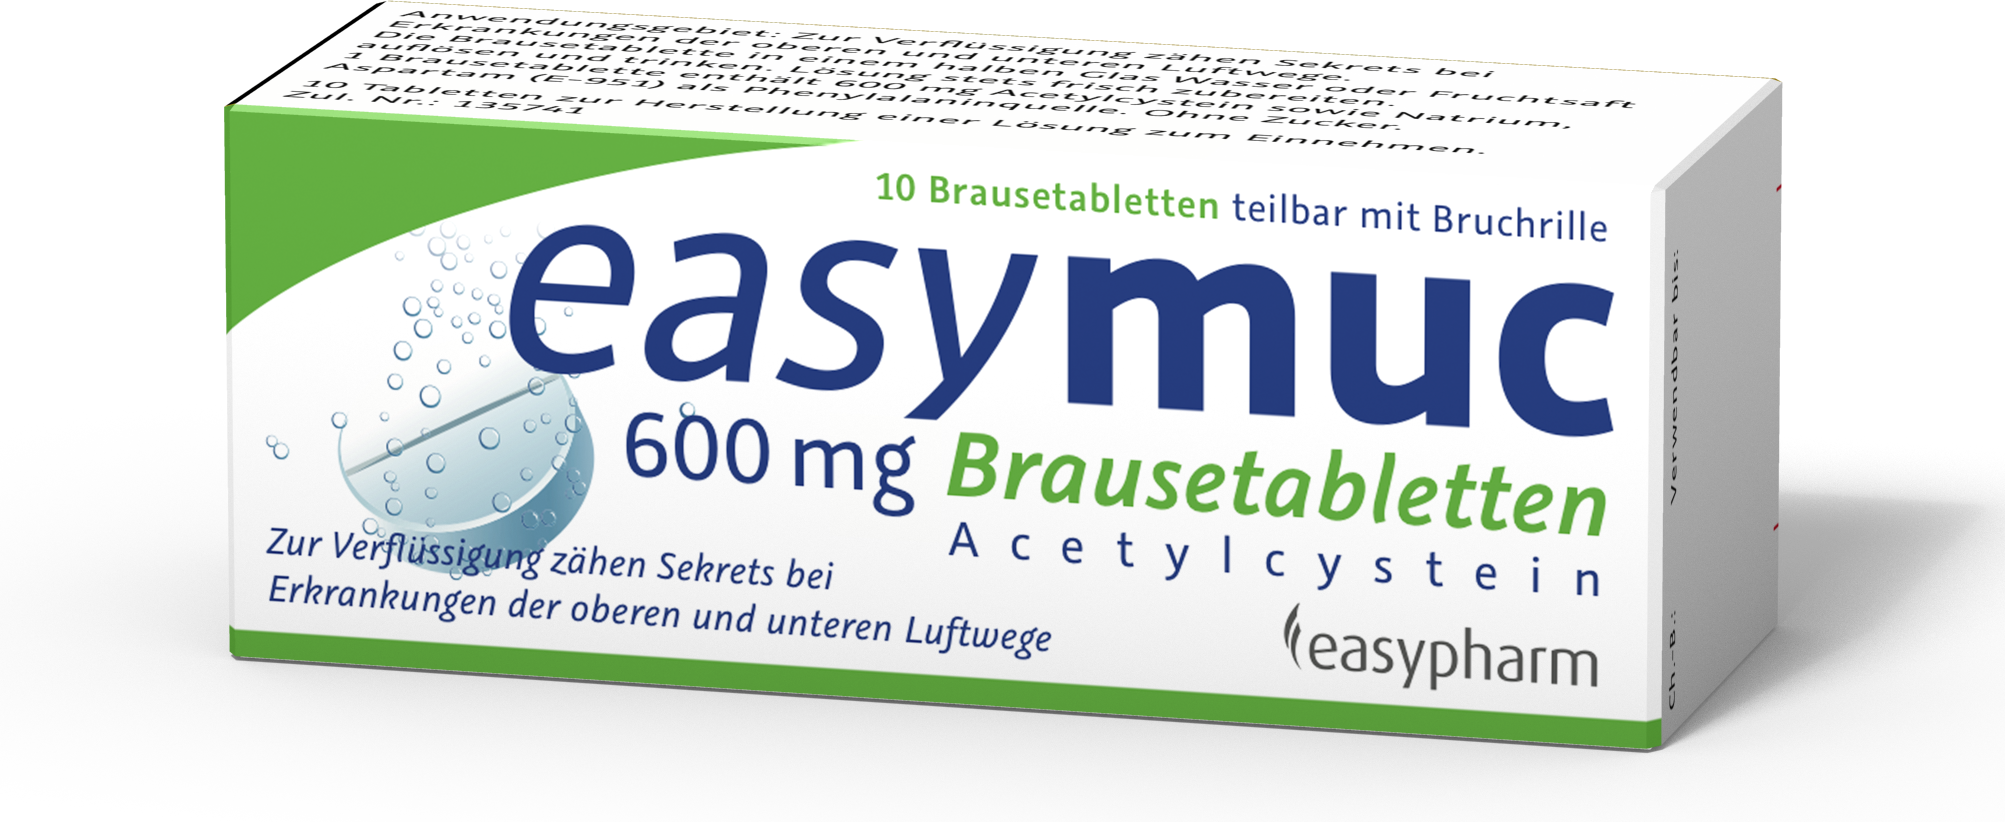 Abbildung easymuc 600 mg Brausetabletten